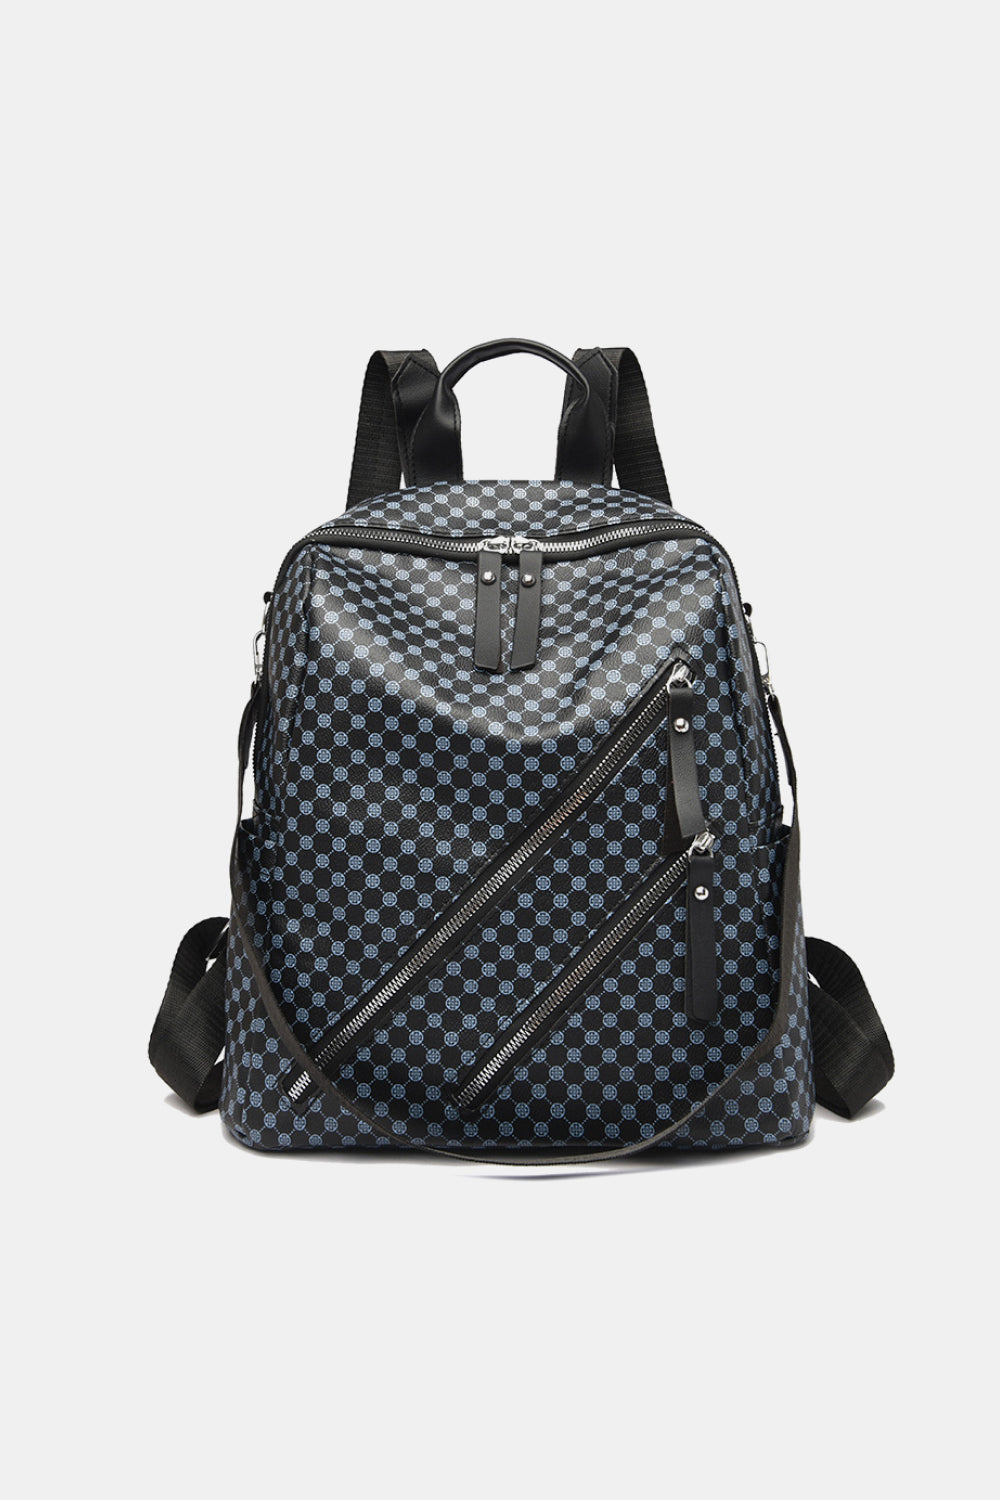 Black Checkered Vegan Leather Two-Piece Bag Set